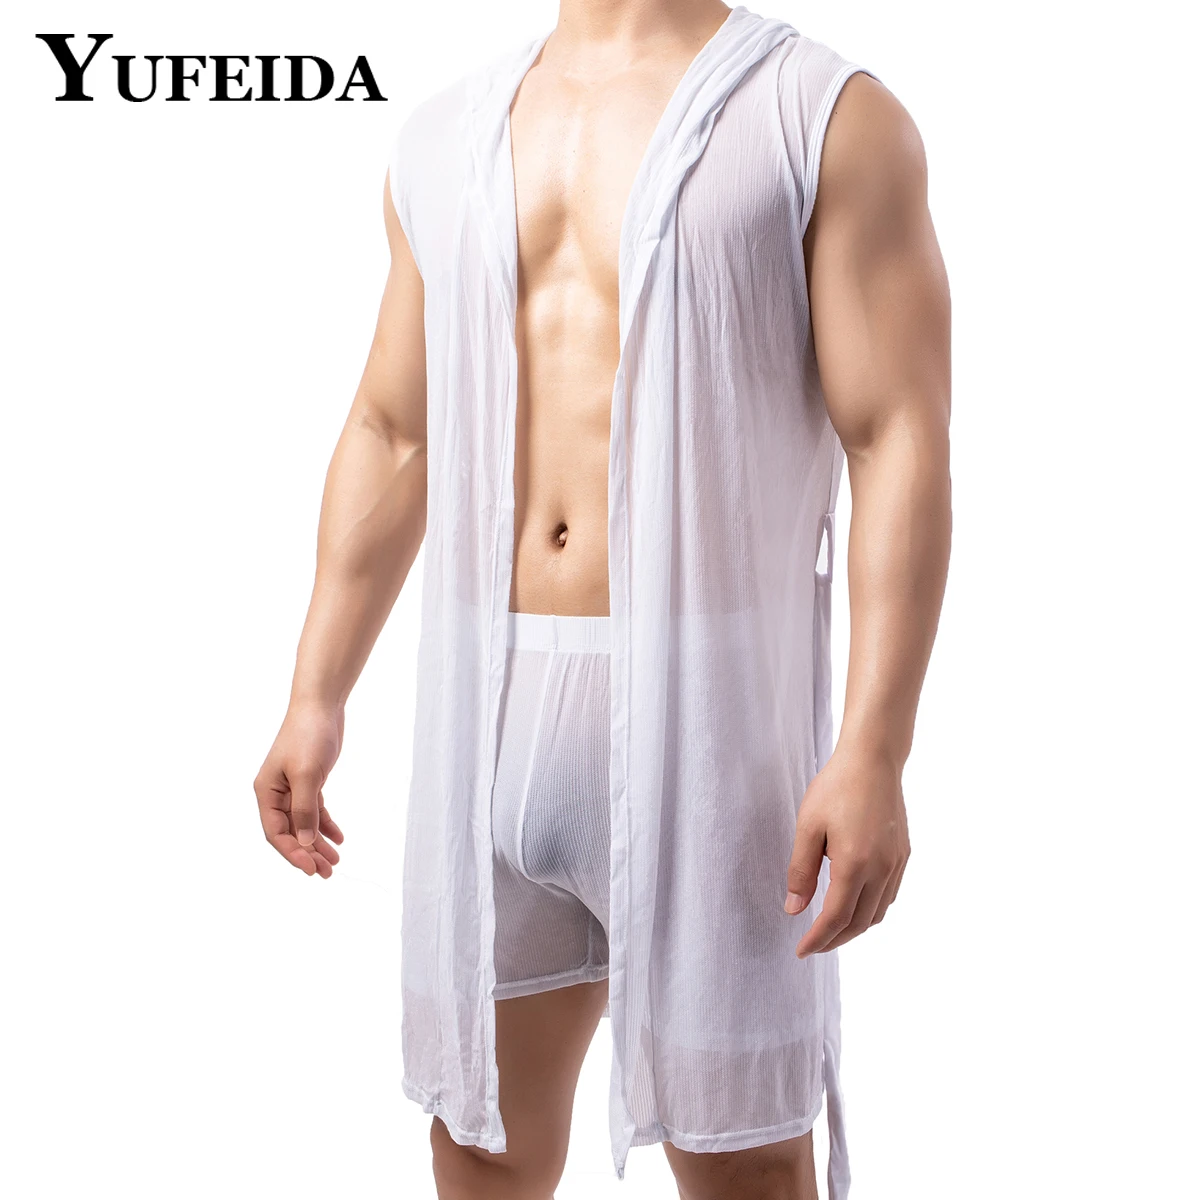 

YUFEIDA Mens Mesh Robes Sexy Men Hoode Bathrobe Sleepwear Sleeveless Bathrobe Sleep Lounge Nightgown Male Kimono Bathing Pyjamas